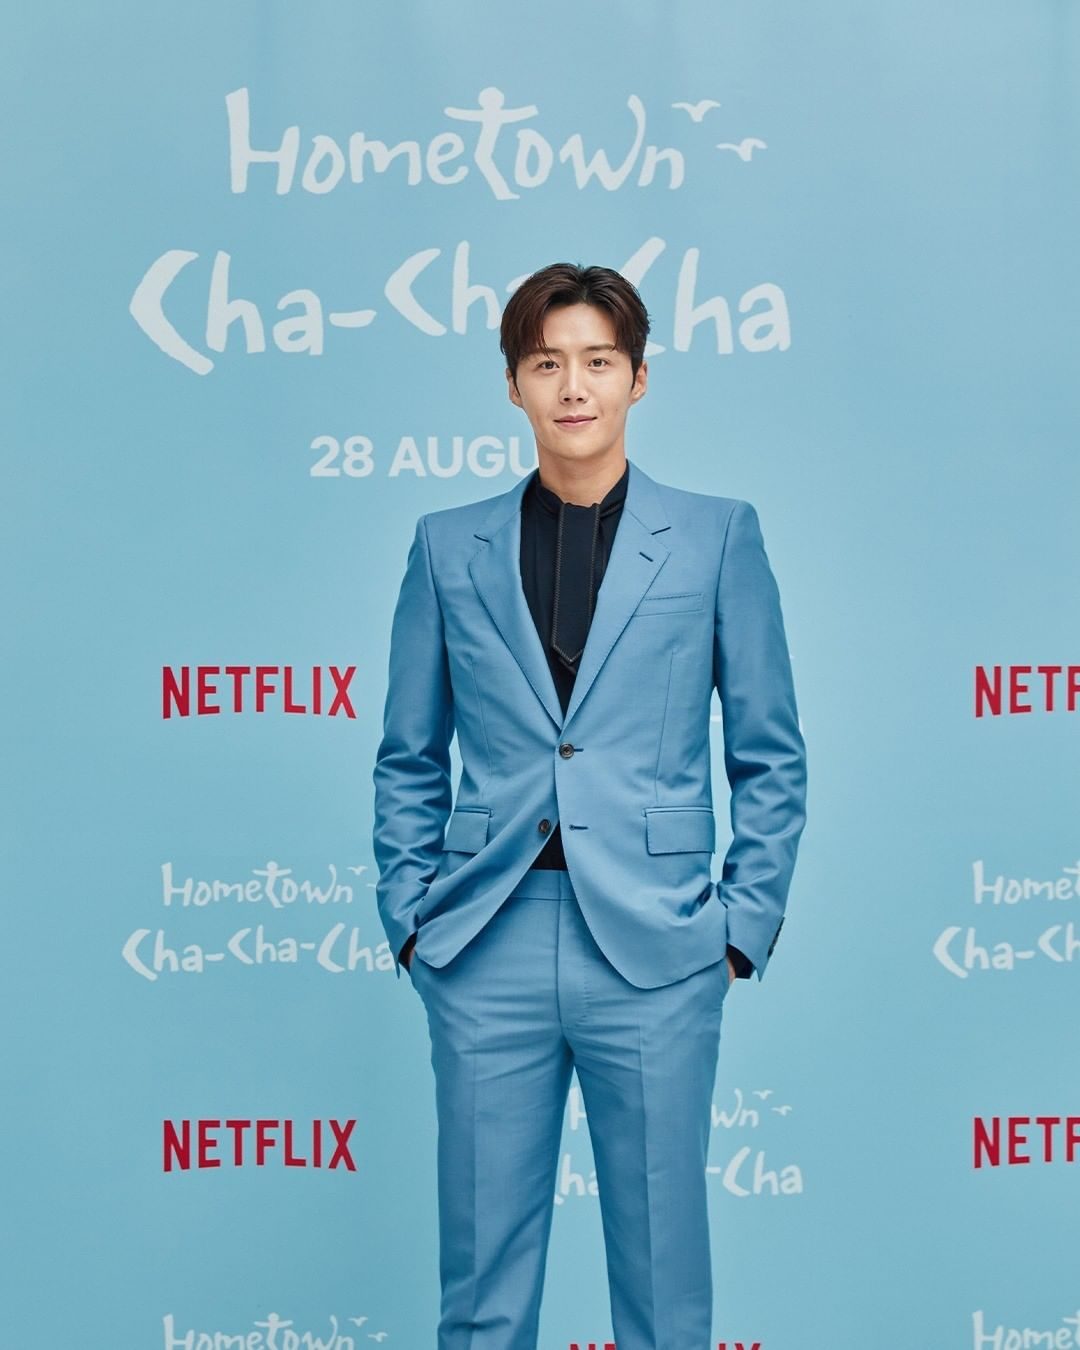 Hometown Cha-Cha-Cha' actor Kim Seon Ho in talks to make his film